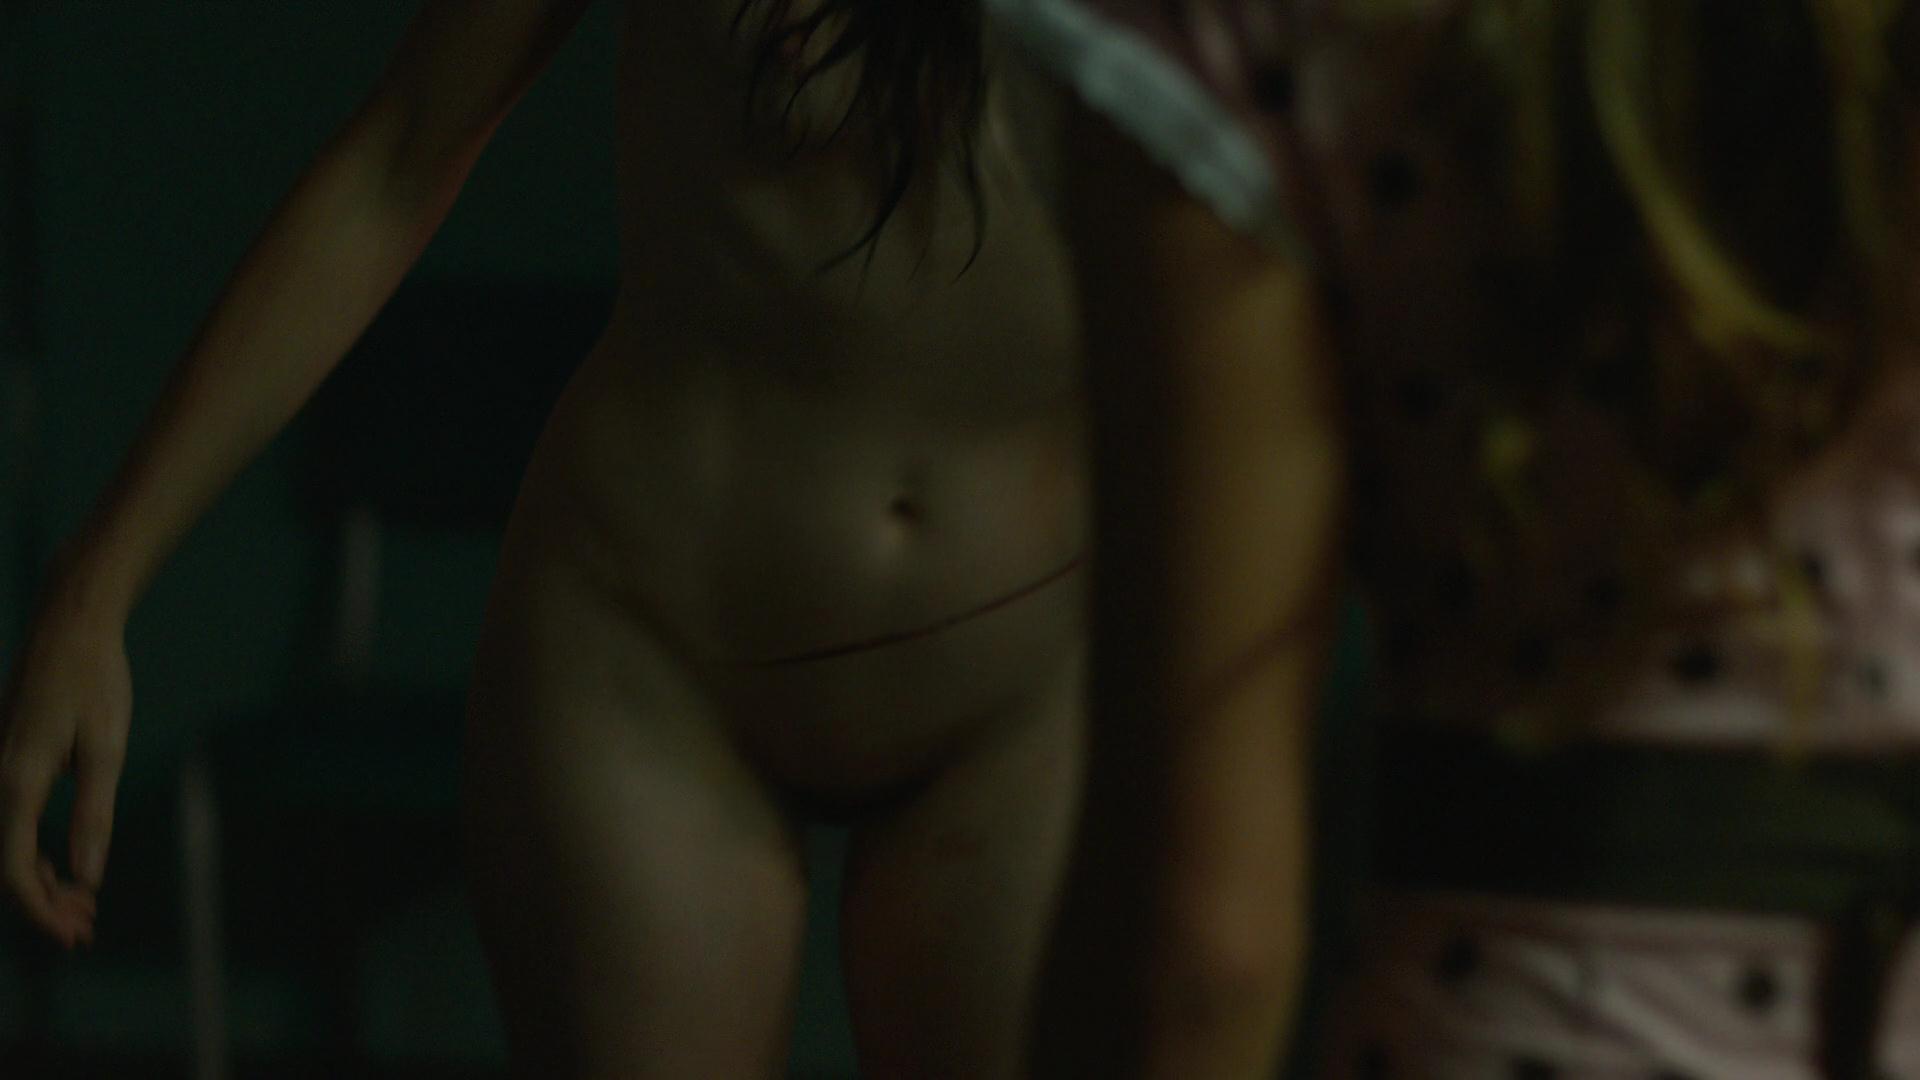 Николь Лалиберте nude pics.